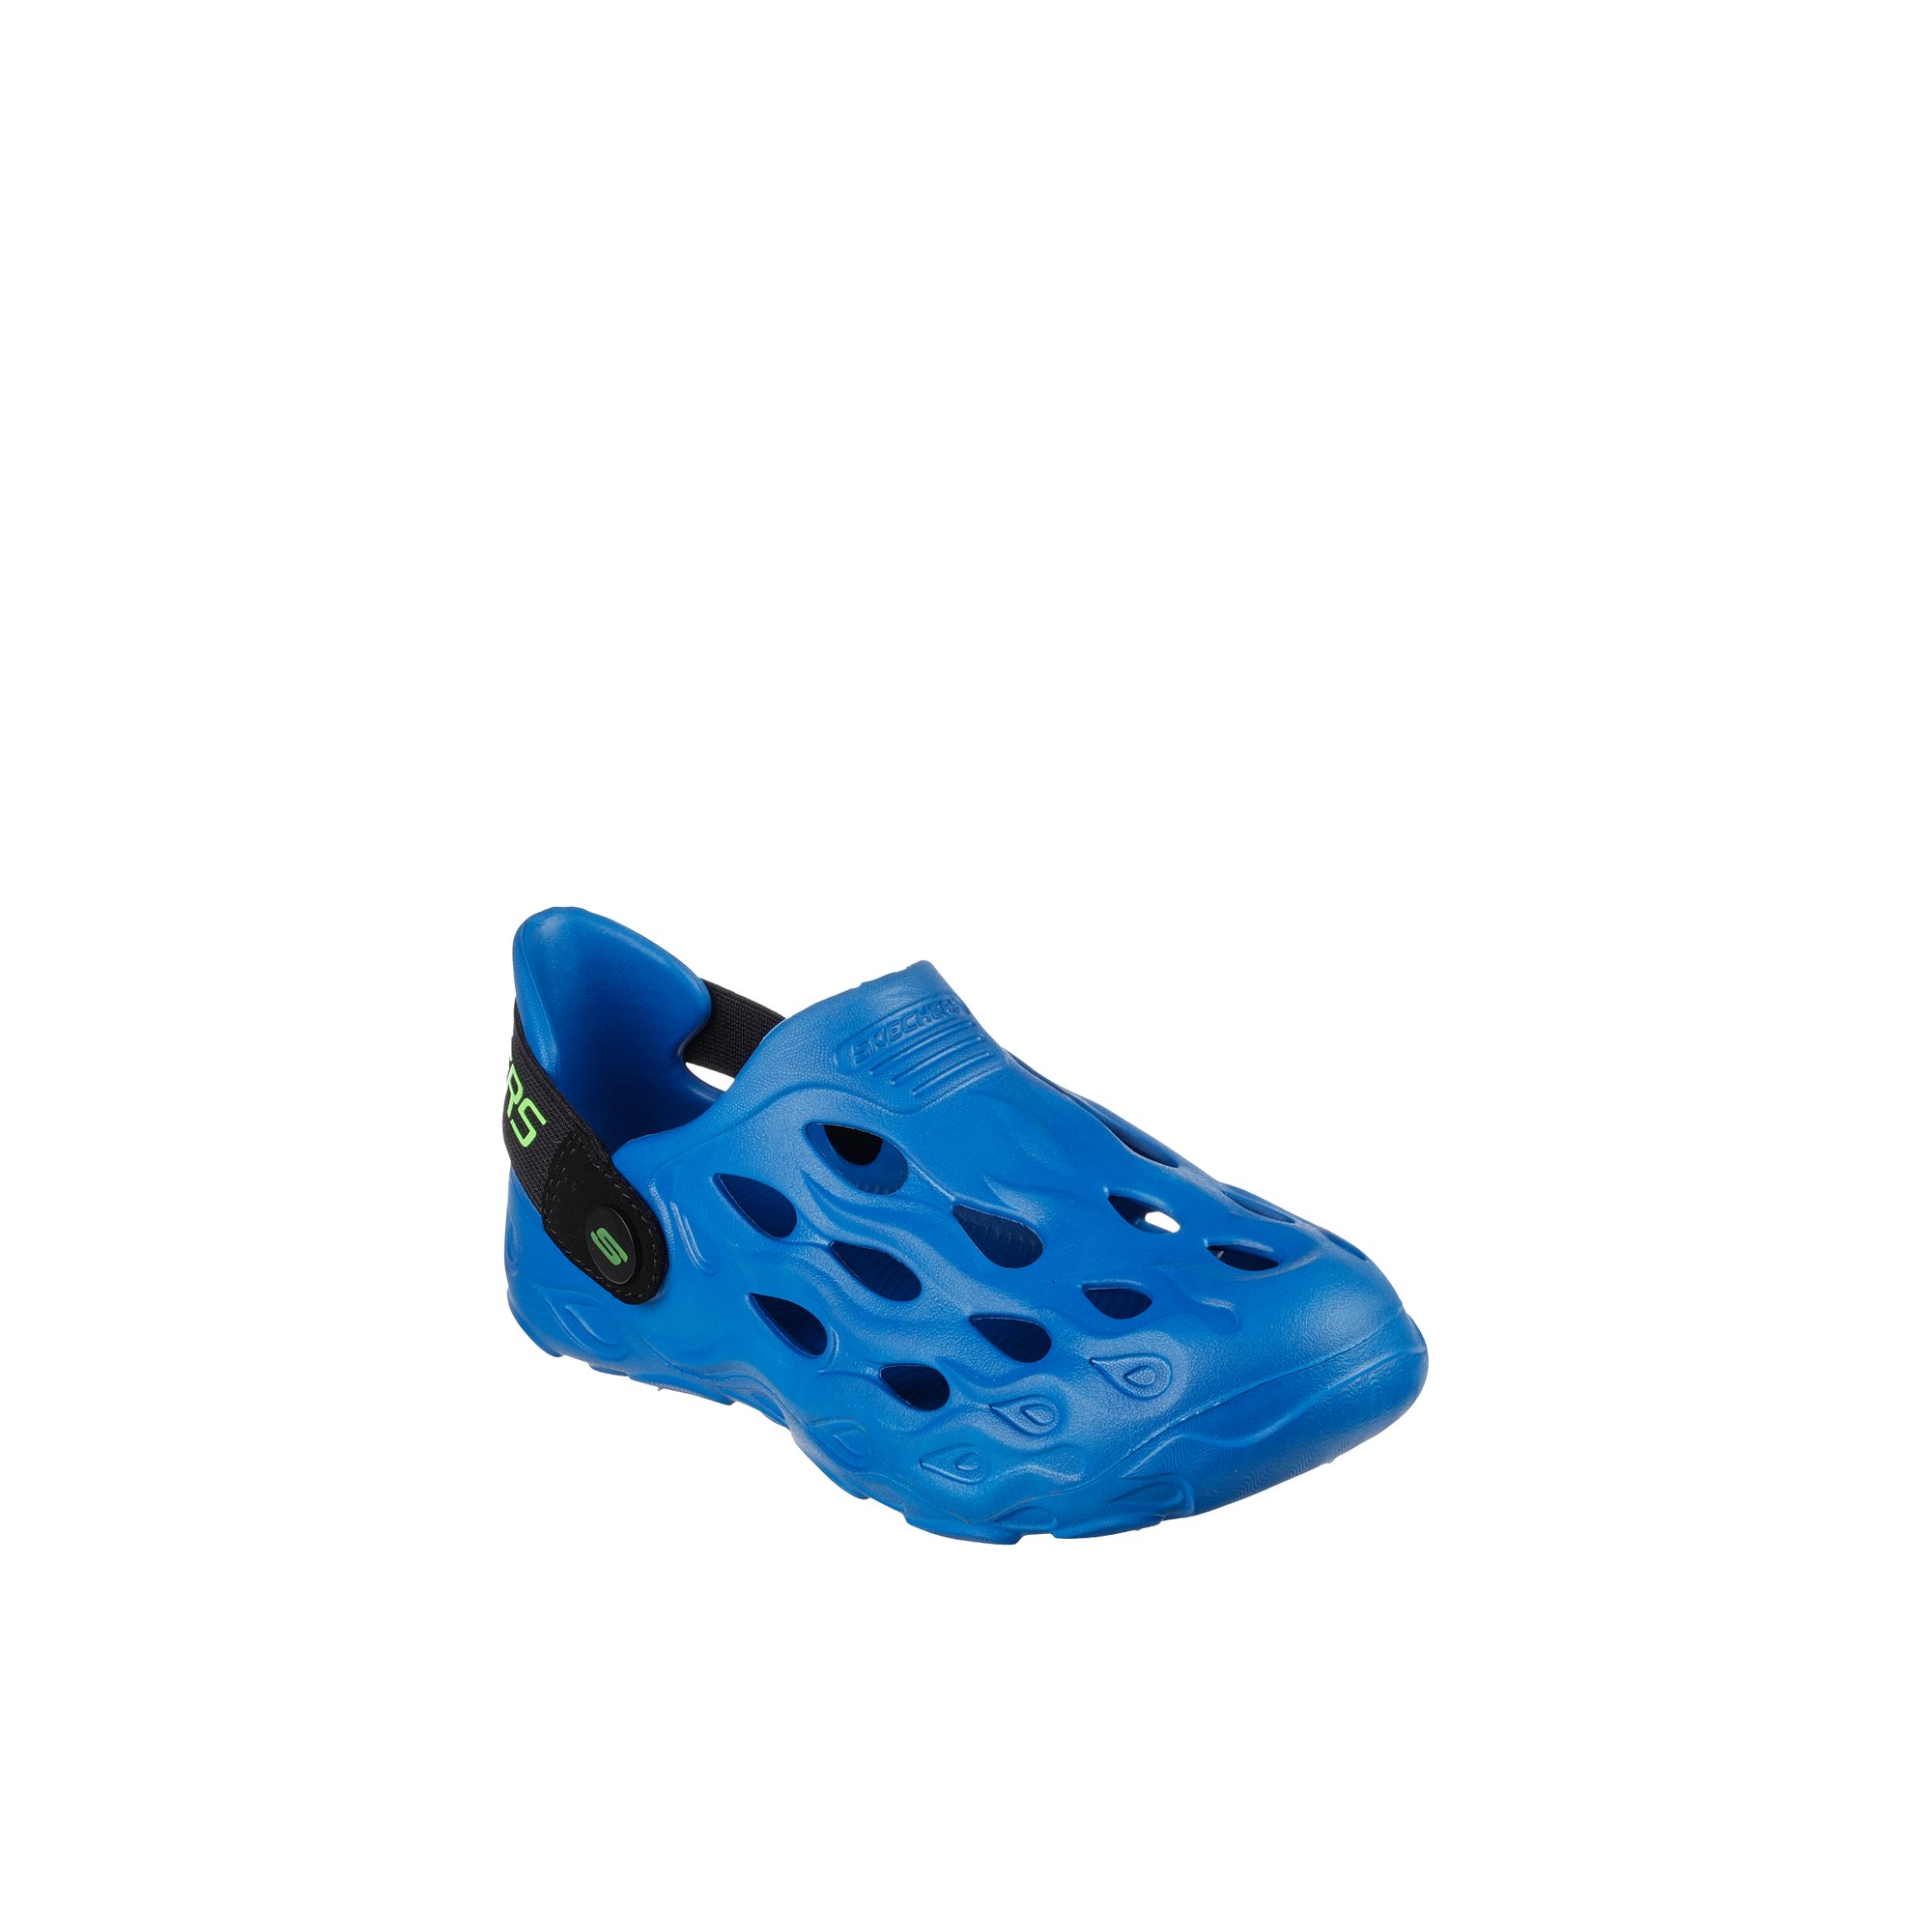 Skechers Thermrush-jb - Kids Boys Junior Sandals - Blue (Shoes) photo